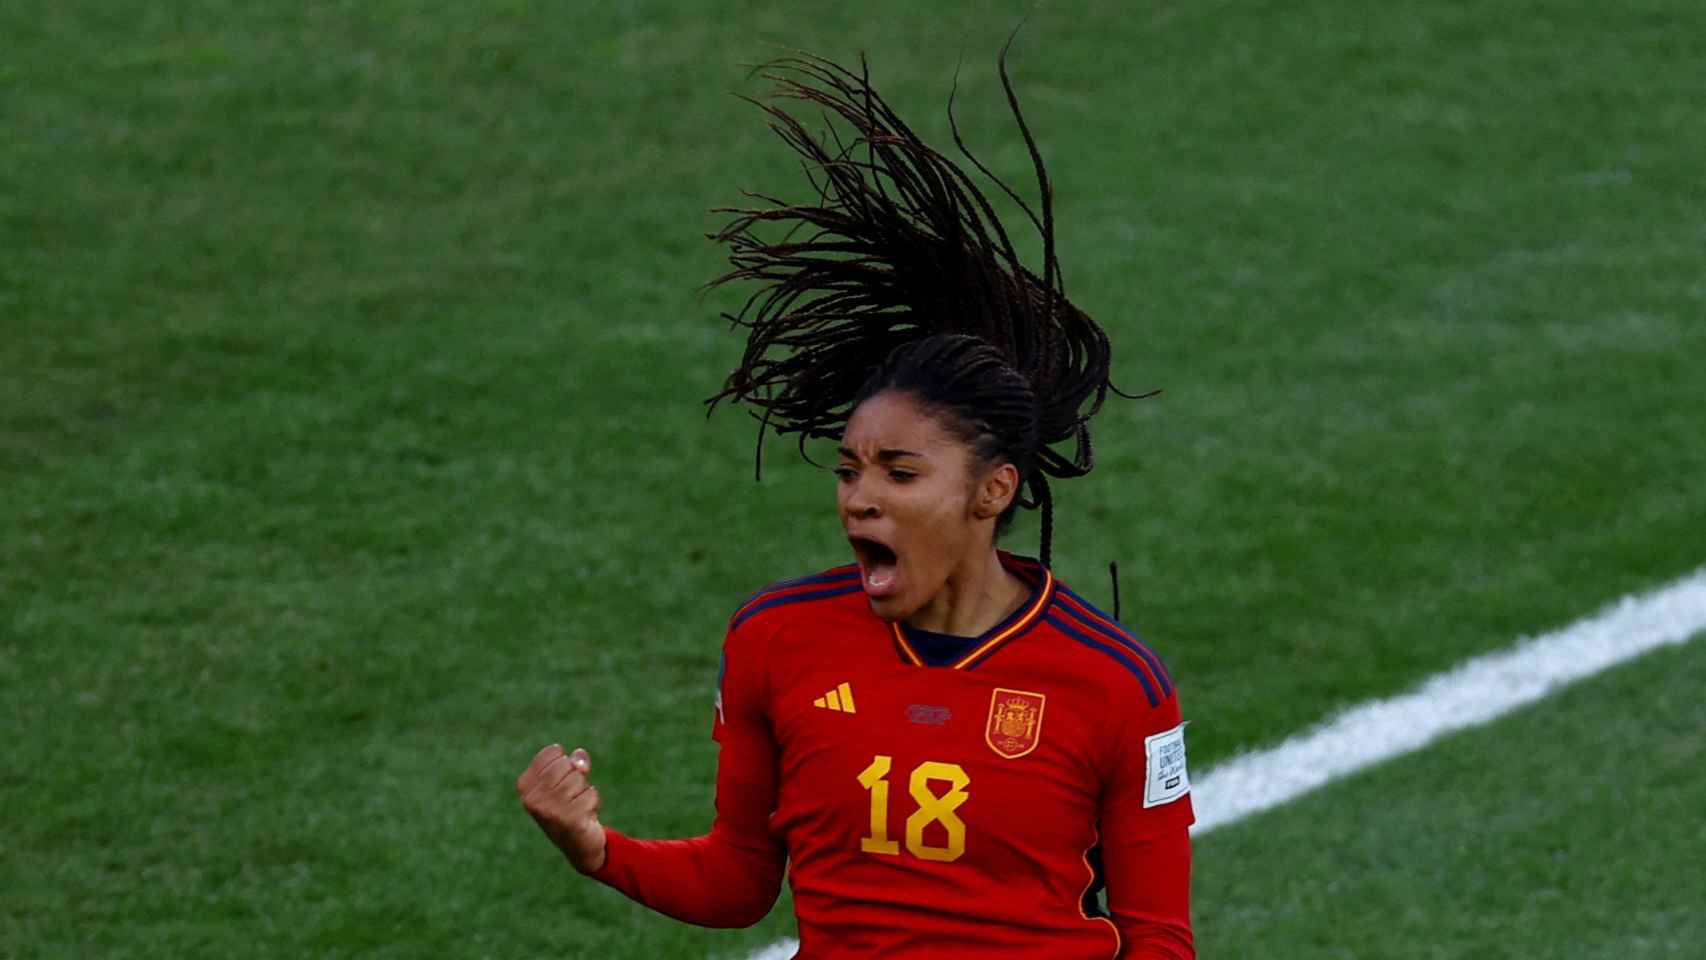 Salma Paralluelo celebra su gol contra Países Bajos.